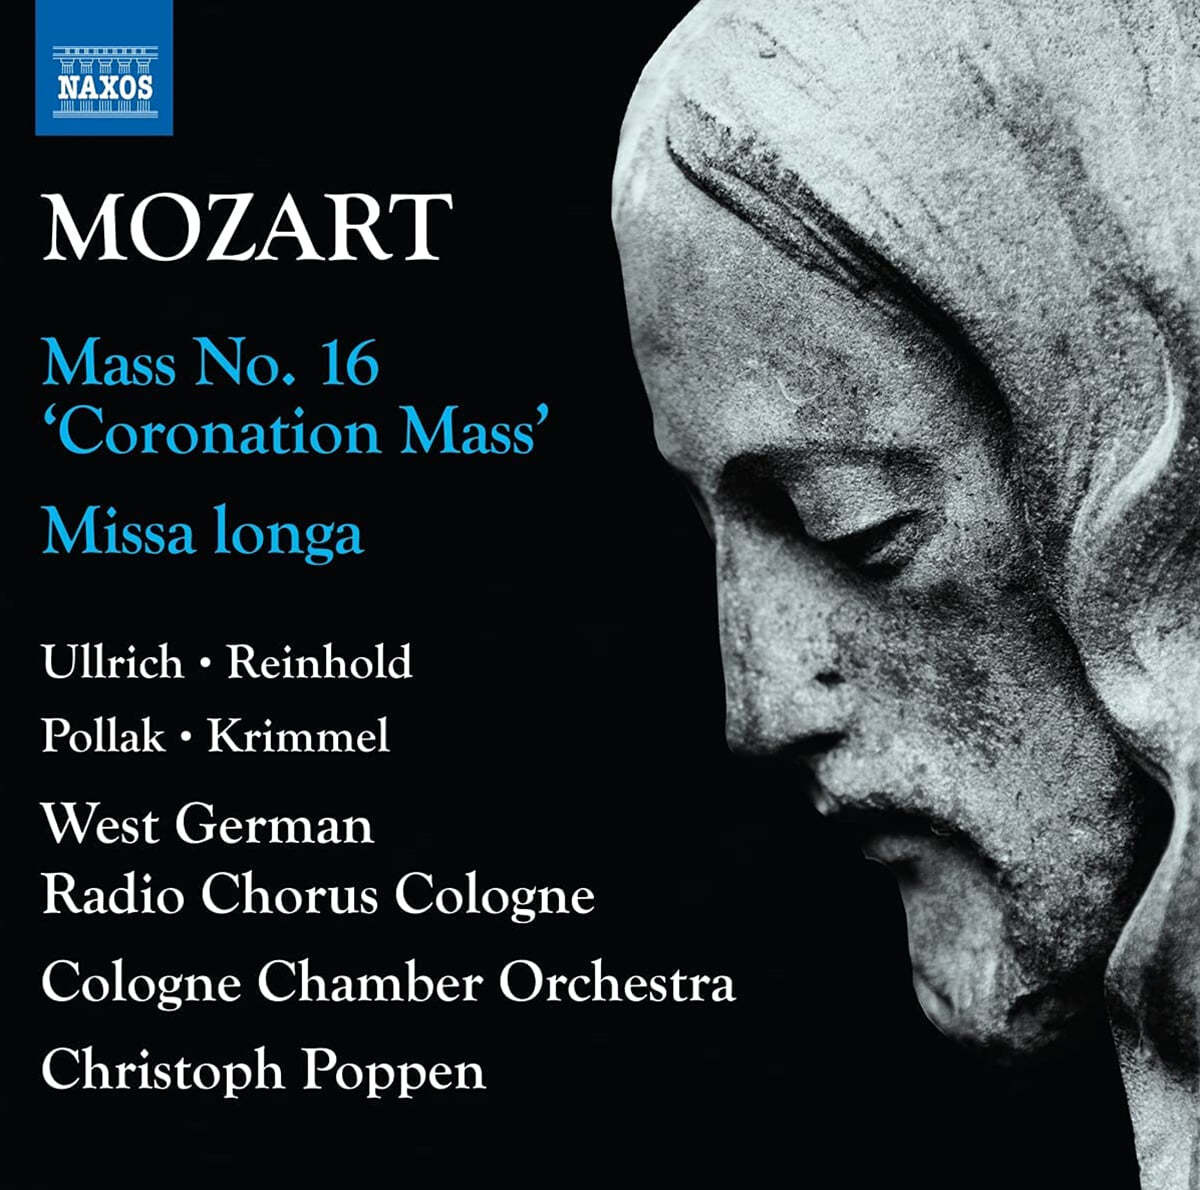 Christoph Poppen 모차르트: 미사 전곡 작품 1집 - 대관식 미사, 미사 롱가 (Mozart: Mass No.16 'Coronation Mass', Missa longa) 